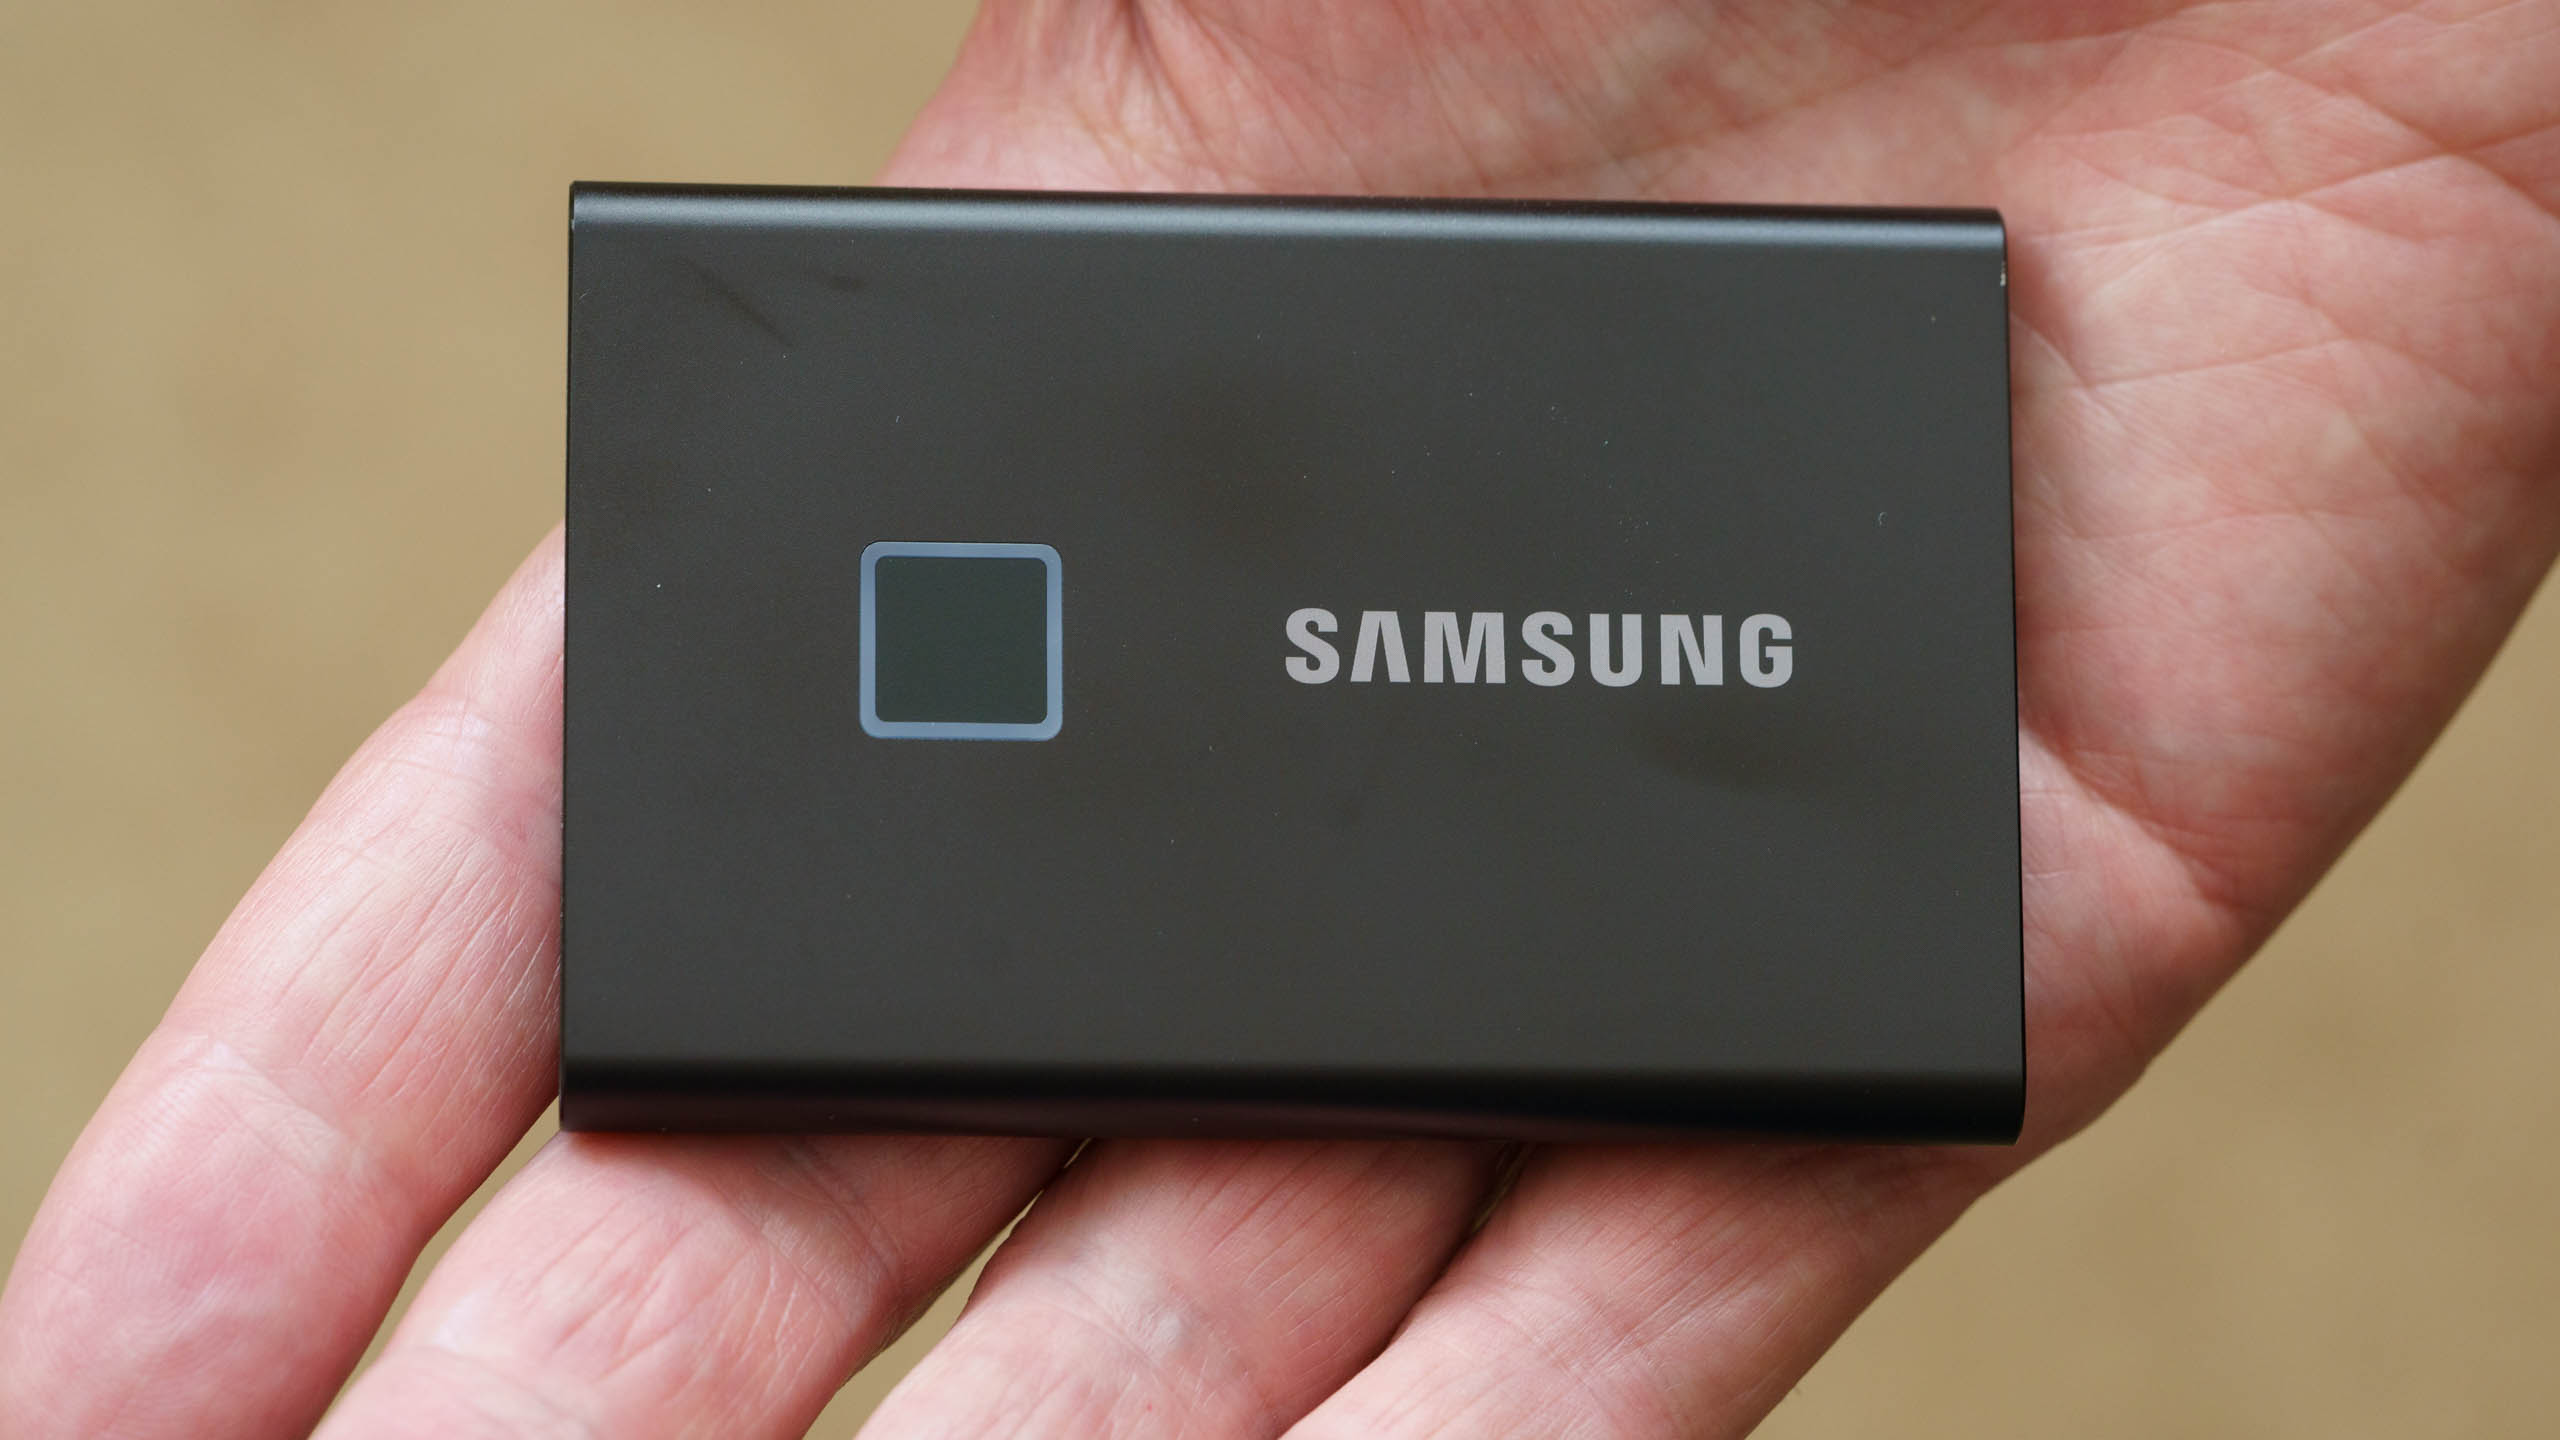 Portable SSD T7 TOUCH USB 3.2 500GB (Silver) Memory & Storage -  MU-PC500S/WW